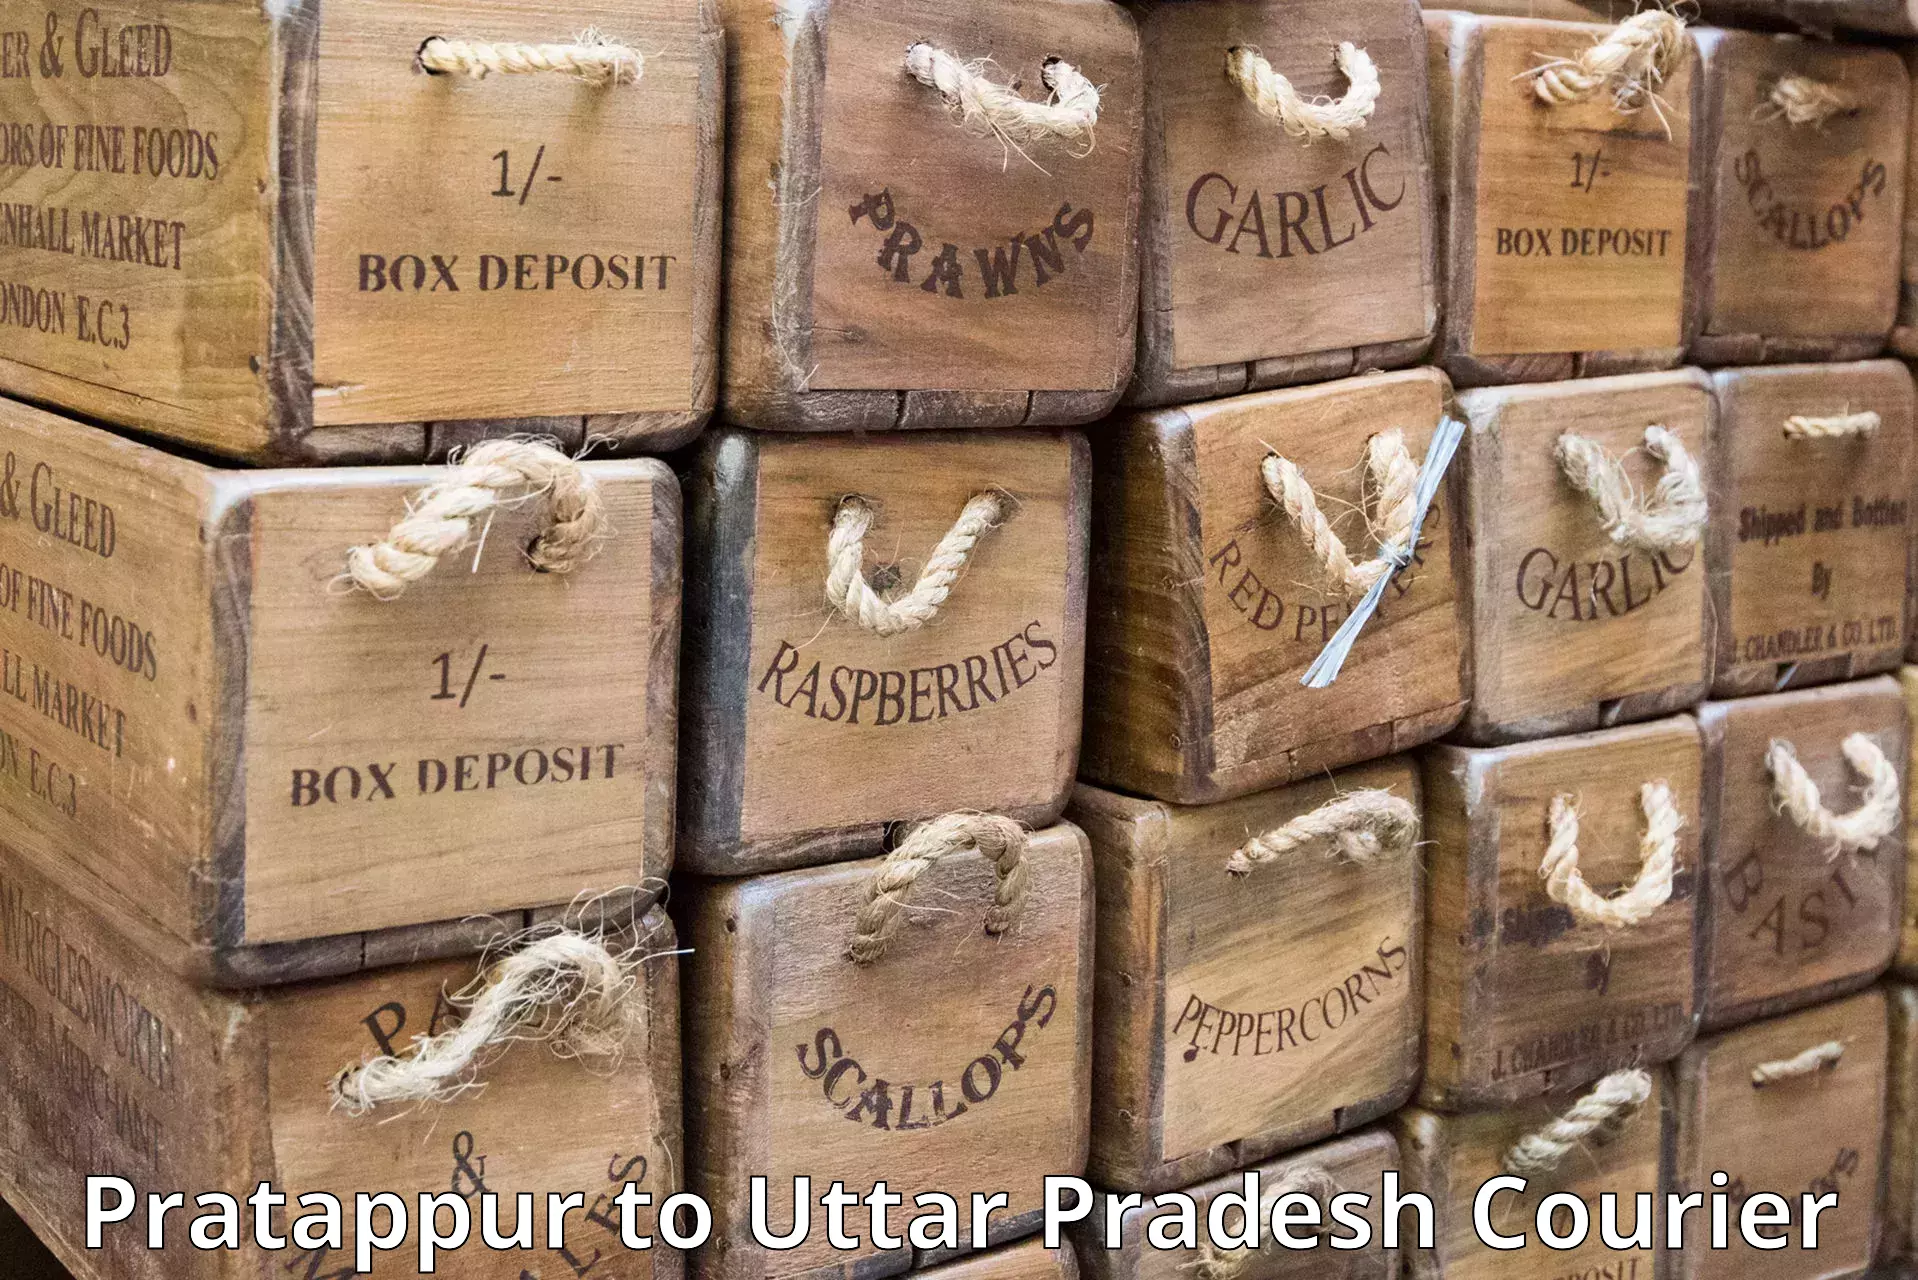 Courier service innovation Pratappur to Jalesar